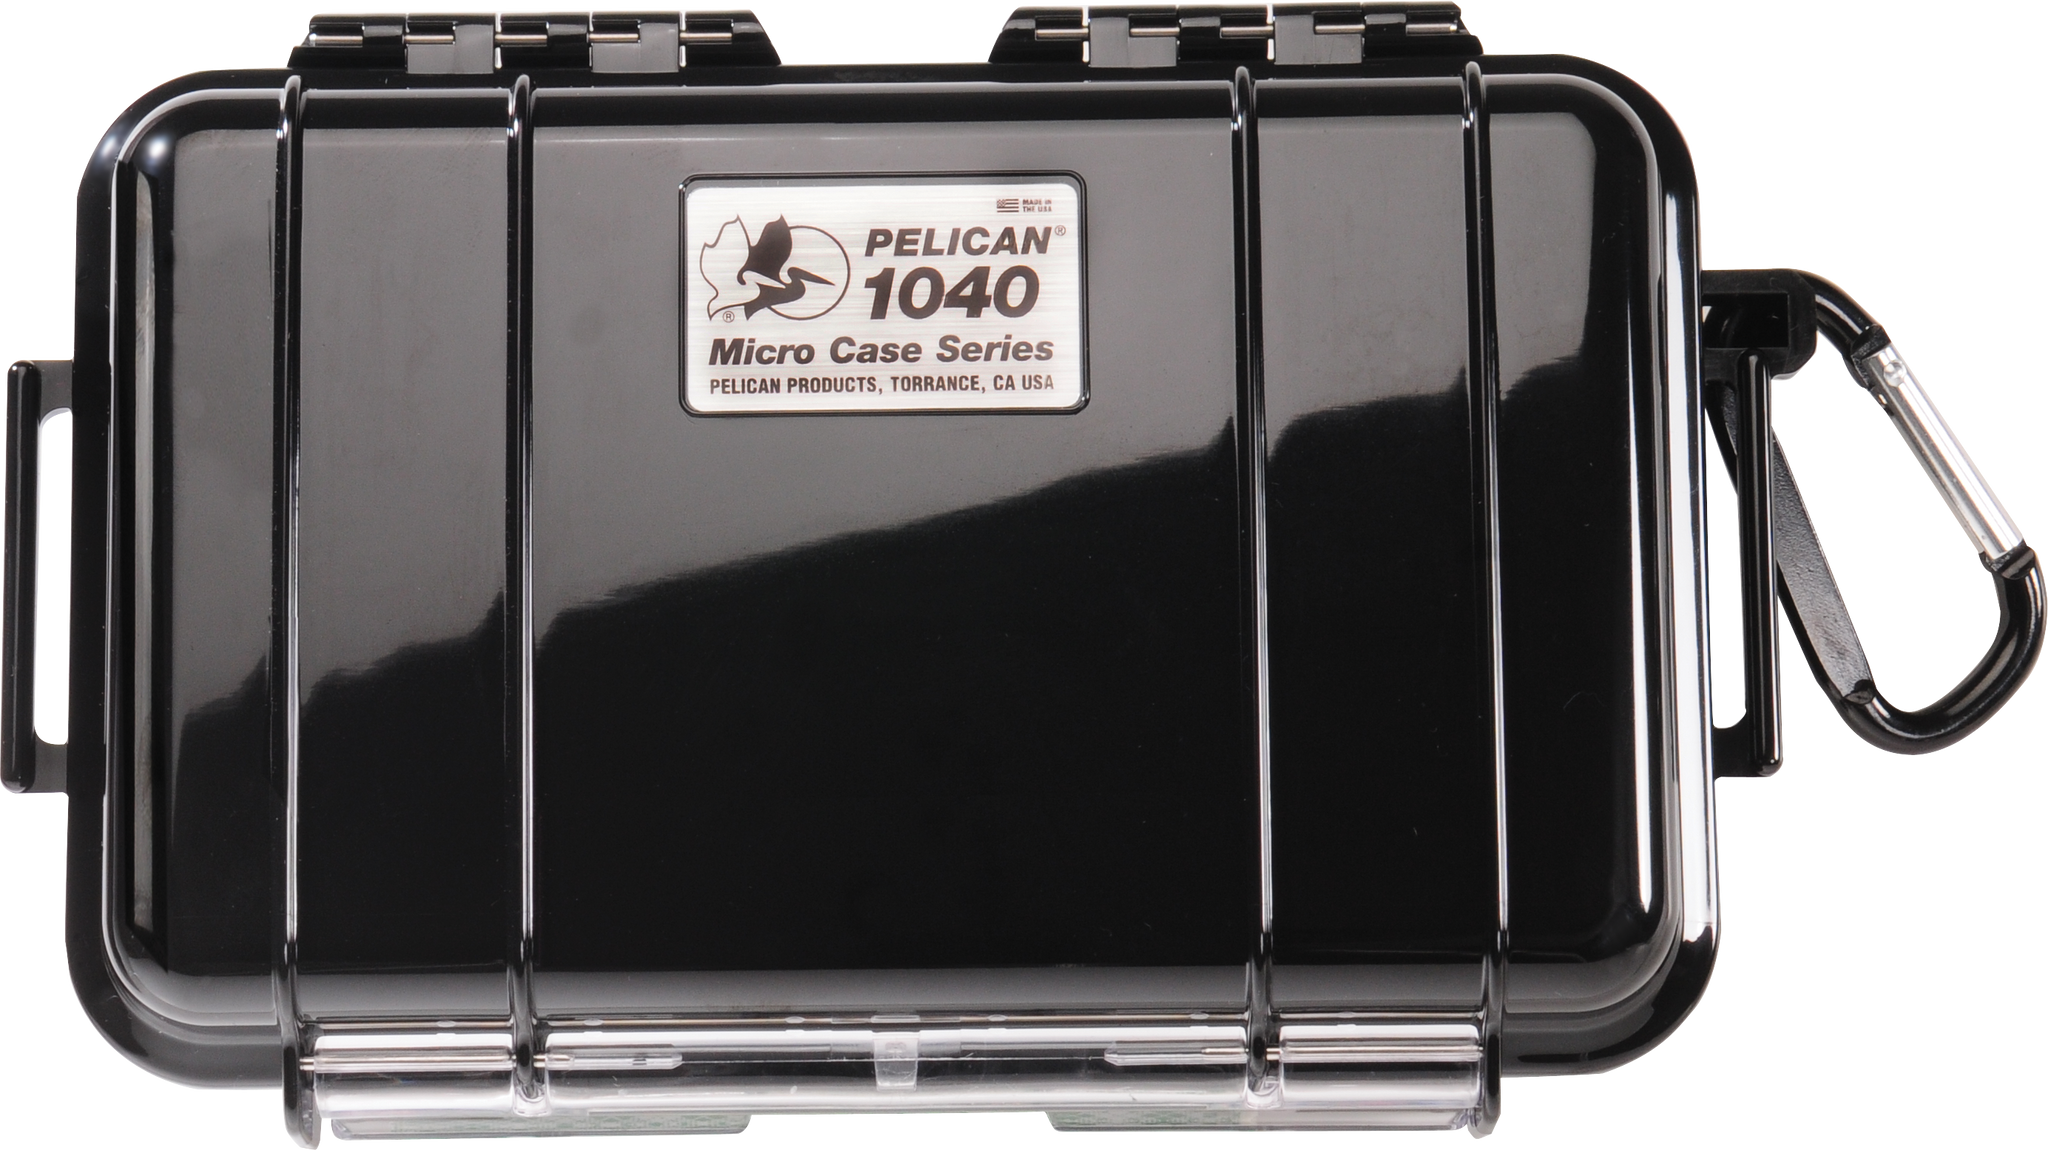 1040 Pelican™ Micro Case